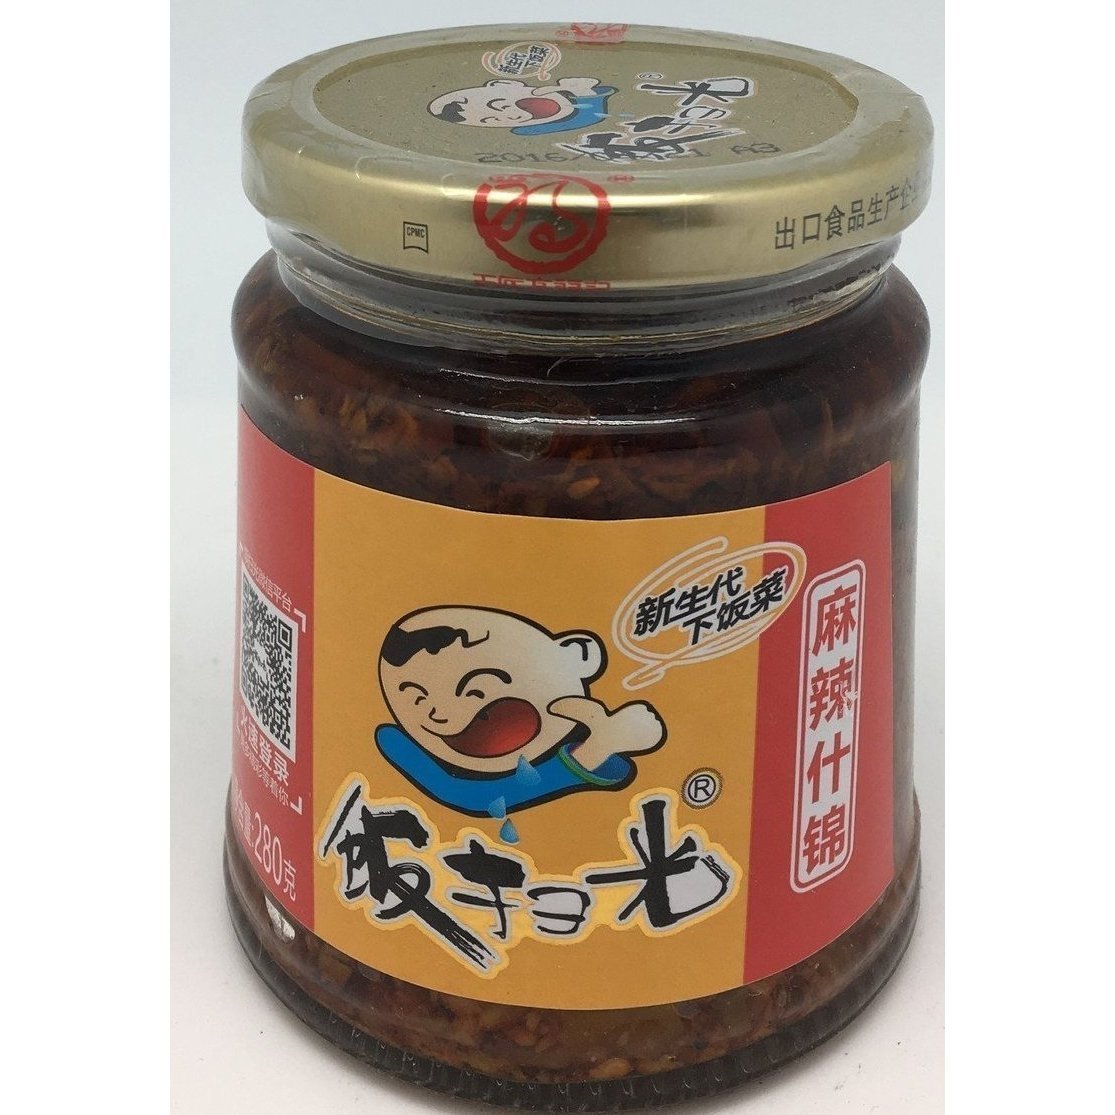 P009C Fan Sao Guang brand - Pickled Combination 280g - 12 jar / 1 CTN - New Eastland Pty Ltd - Asian food wholesalers